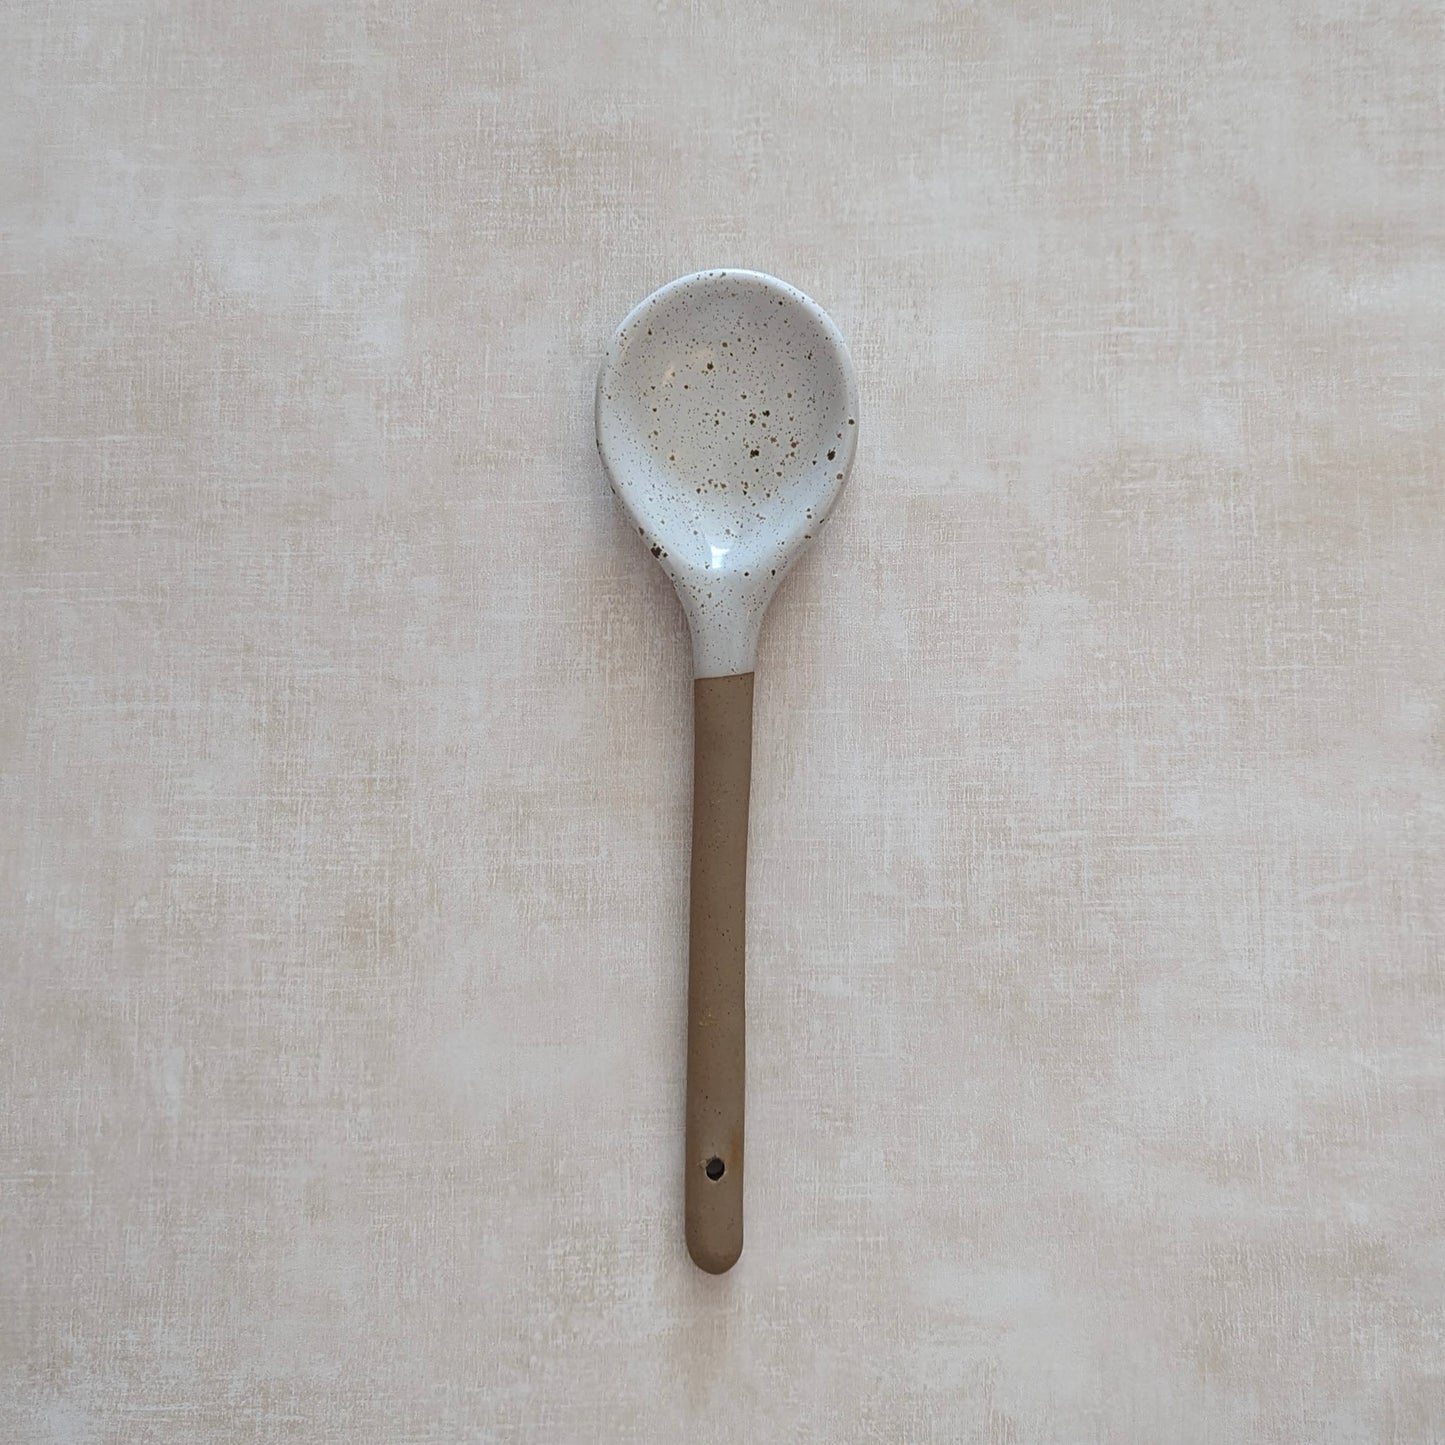 Speckled Ceramic Spoon